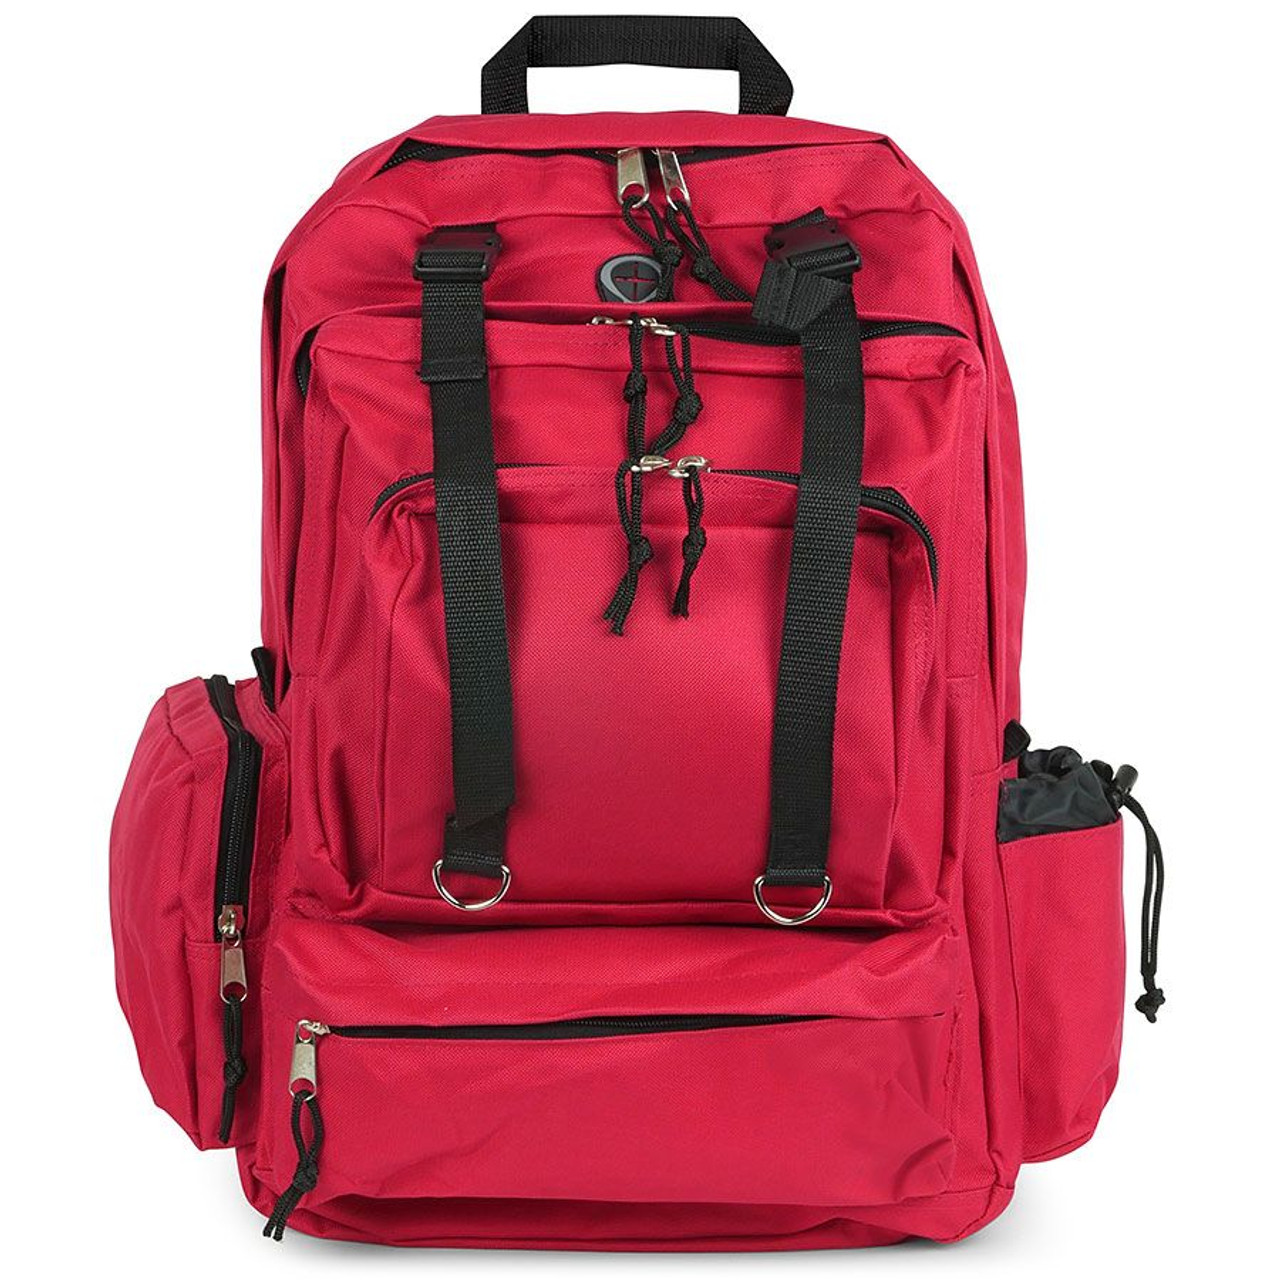 Deluxe Reponder Red Backpack - Emergency Survival Medical Response